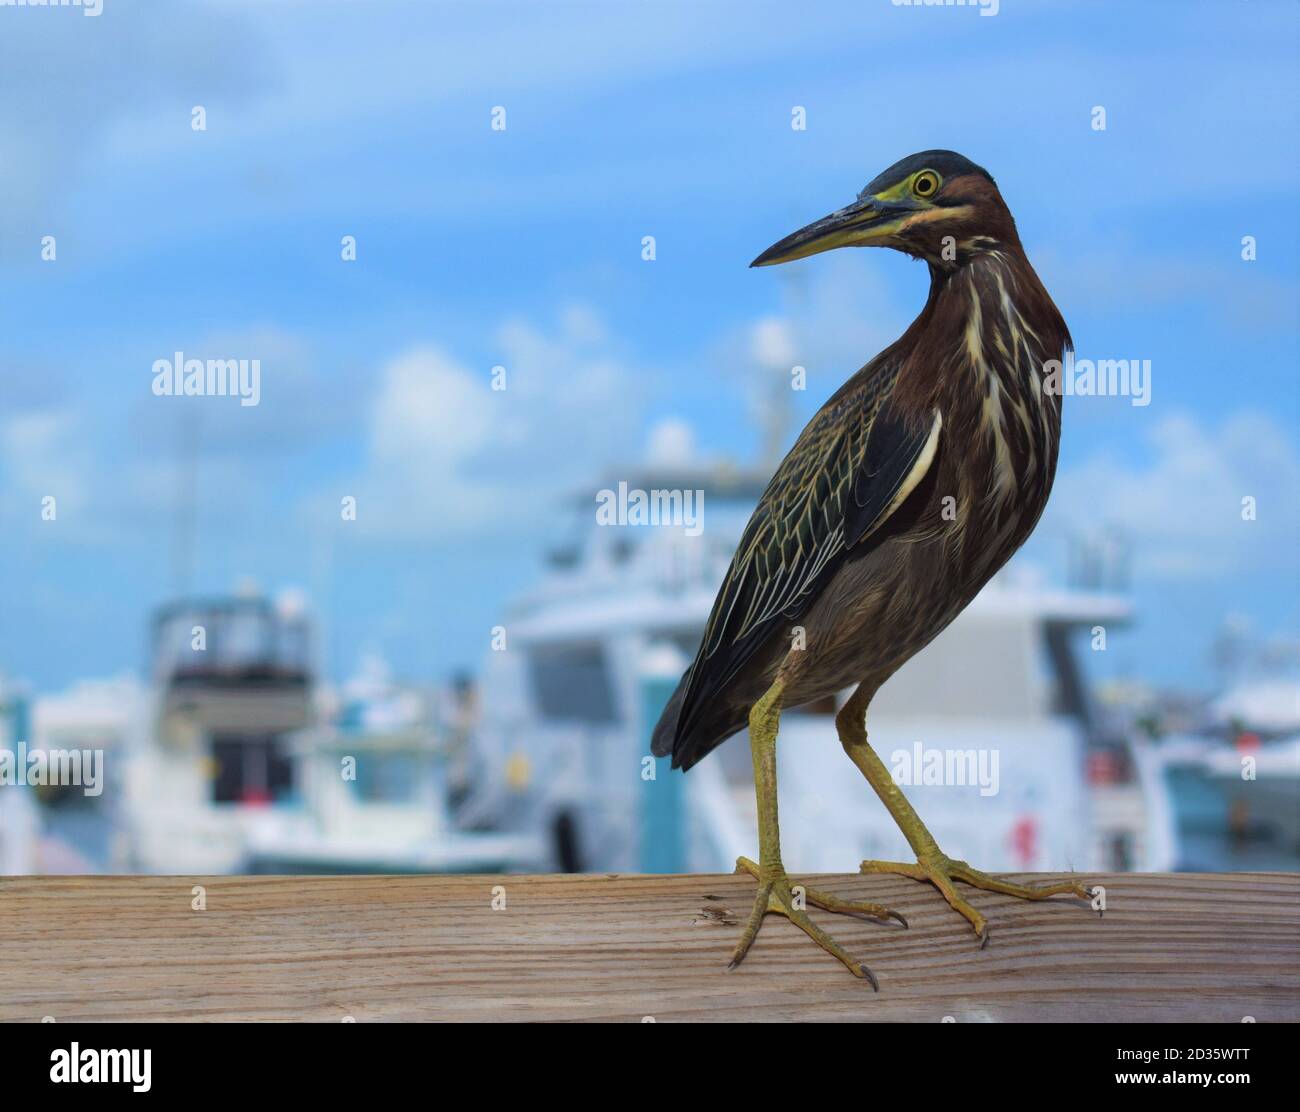 Bird in Florida at a Harbor Stock Photo